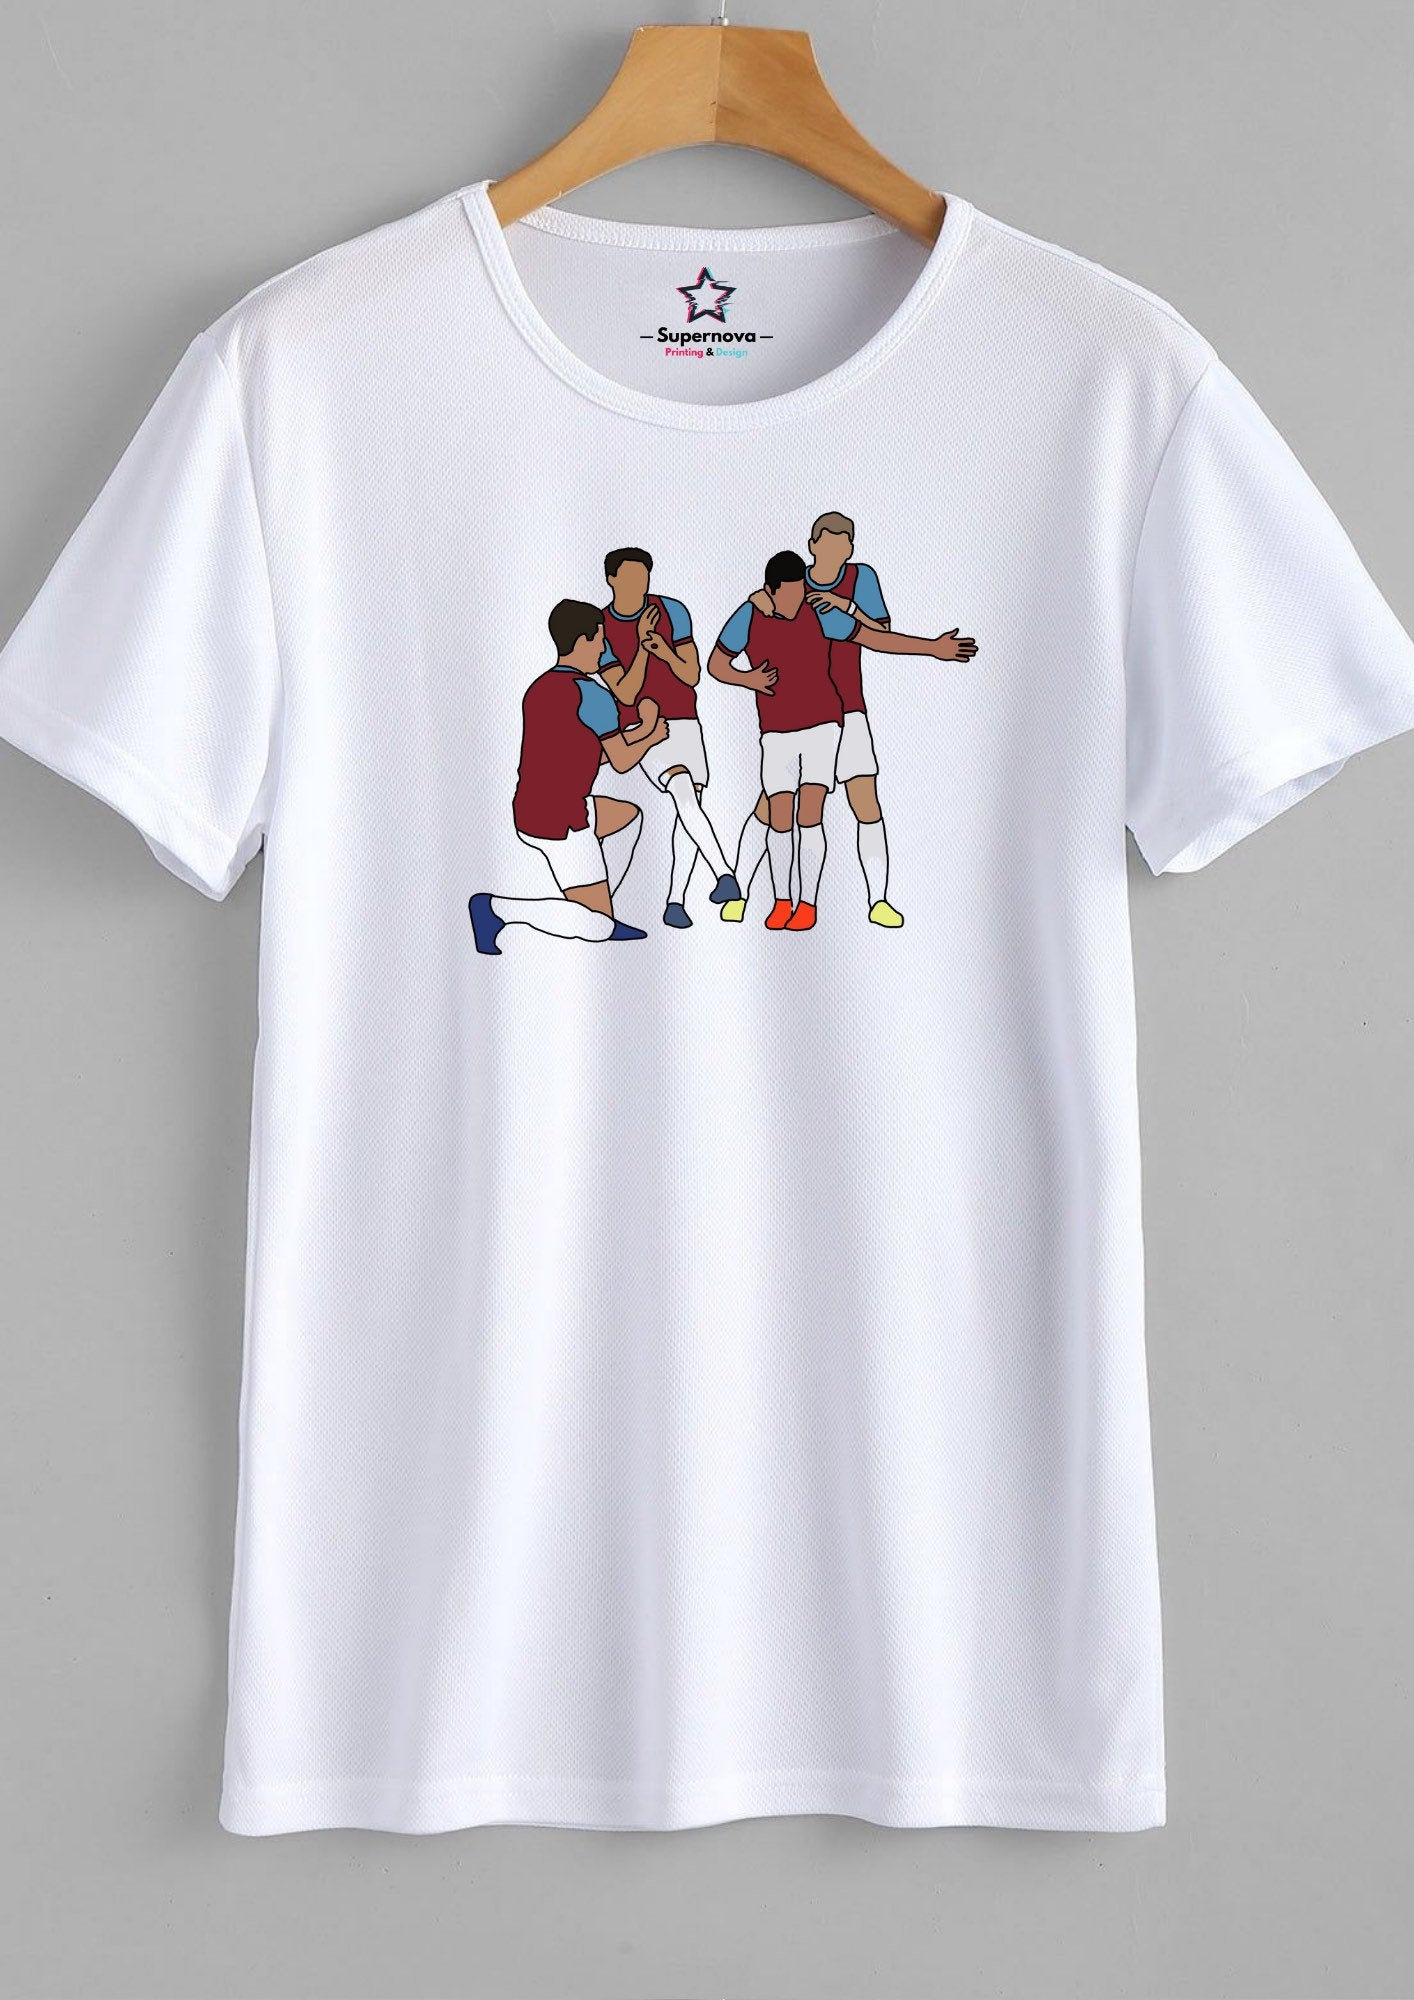 Messing Het beste Veronderstelling West Ham United Band Celebration T-shirt. we Advise to Go a - Etsy